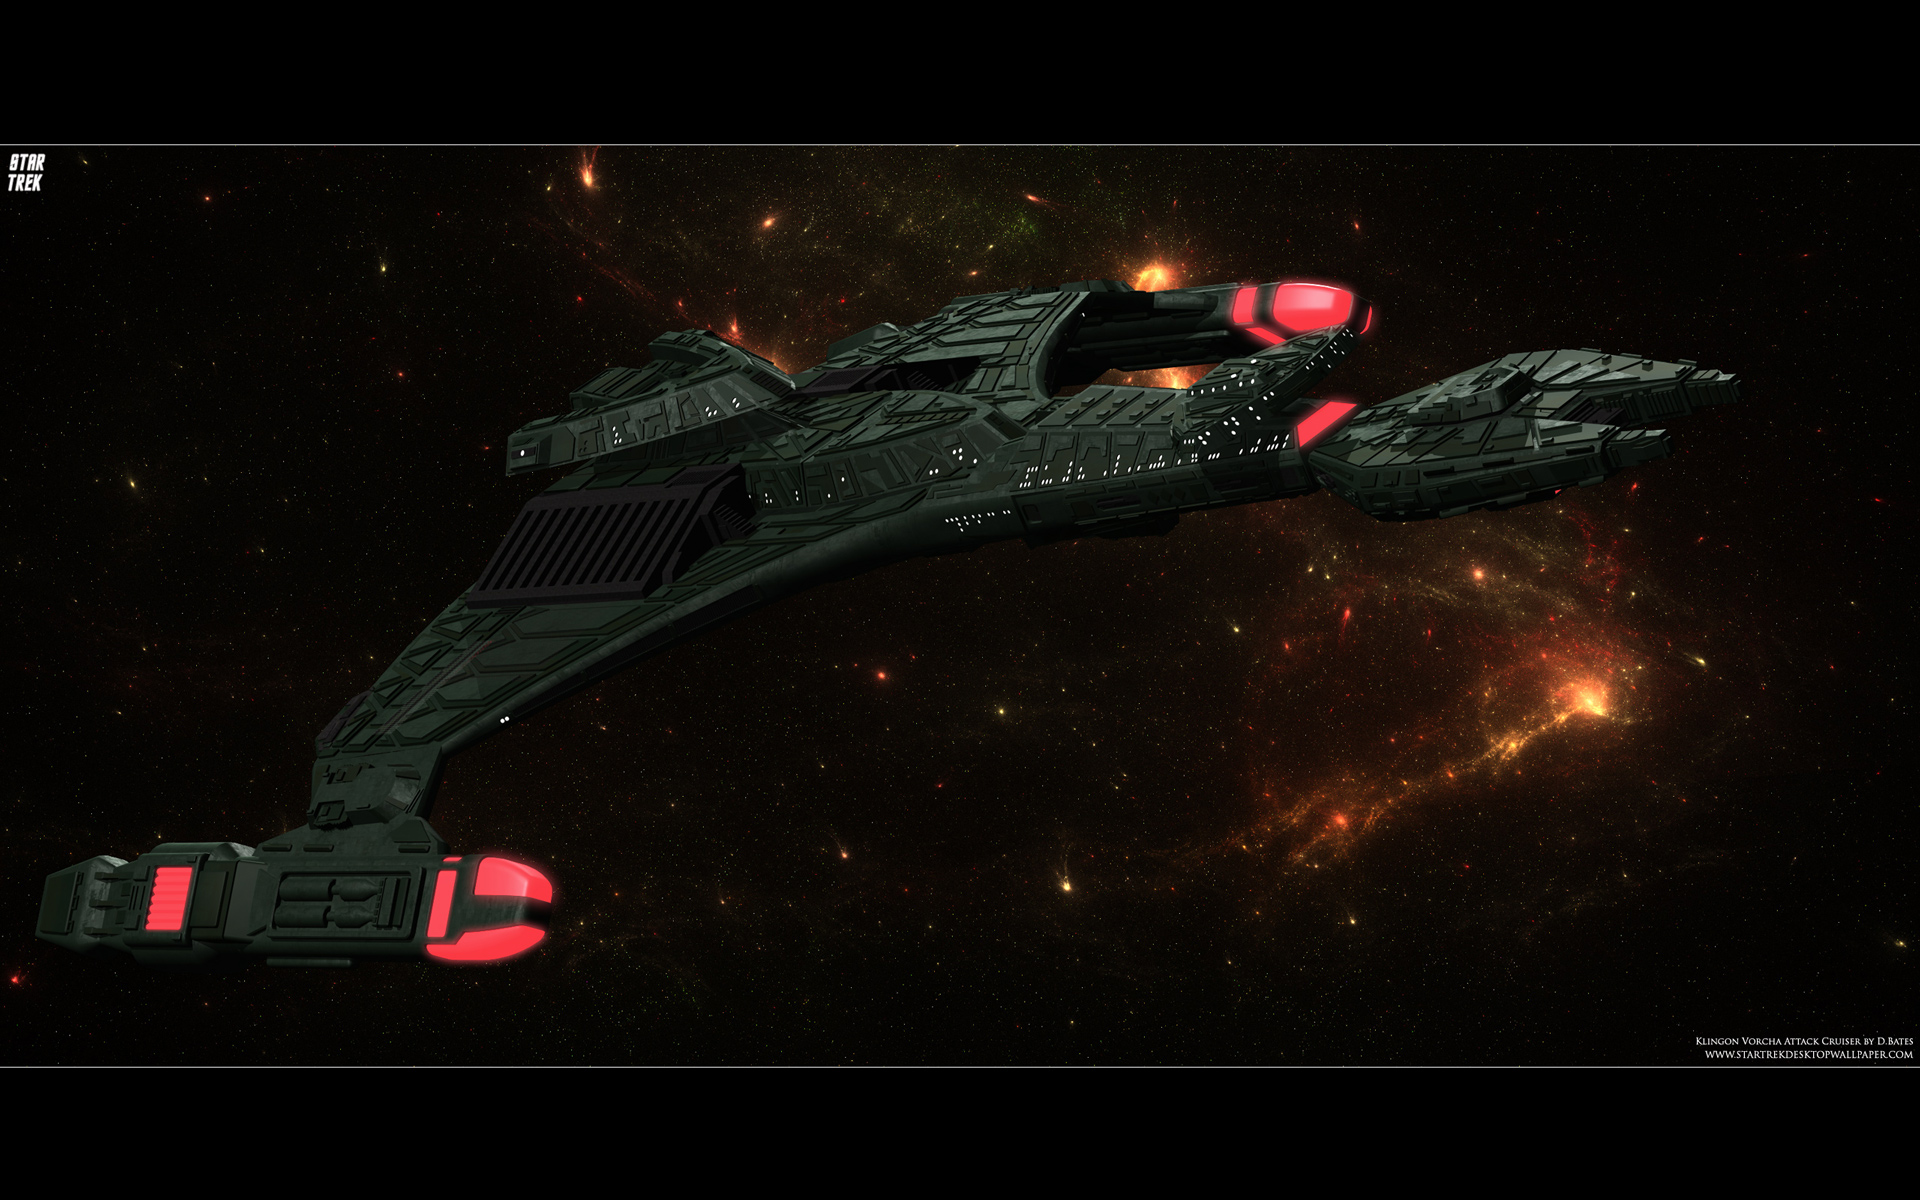 Klingon Wallpaper Star Trek Vor Cha Attack Cruiser